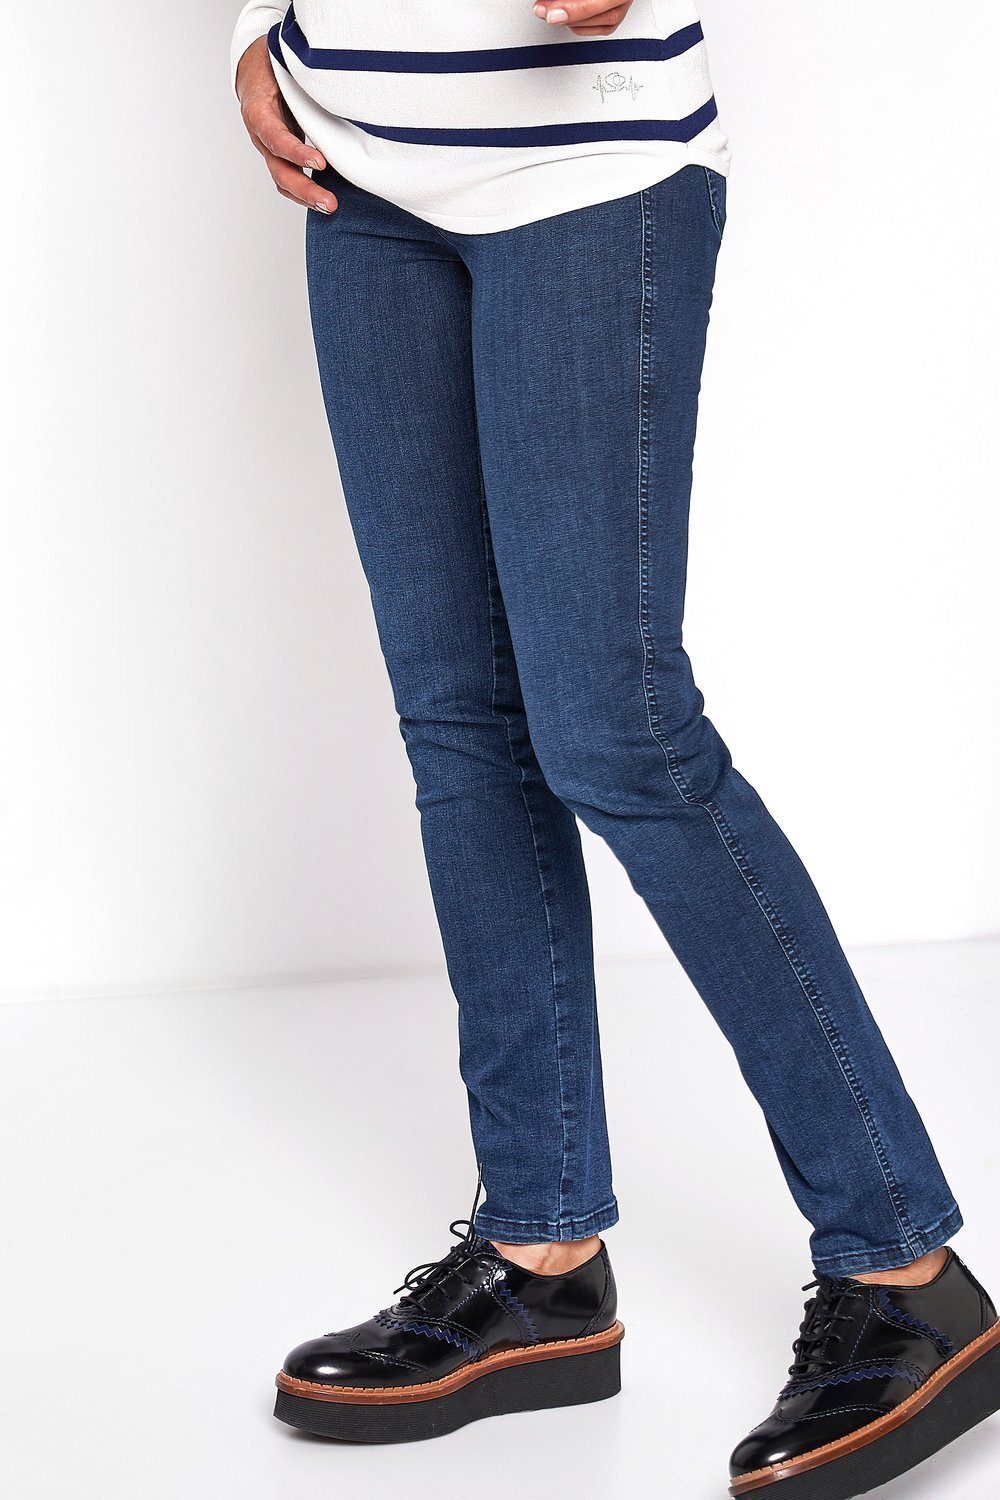 TONI 5-Pocket-Jeans be loved mit hoher Leibhöhe dunkelblau - 582 | 